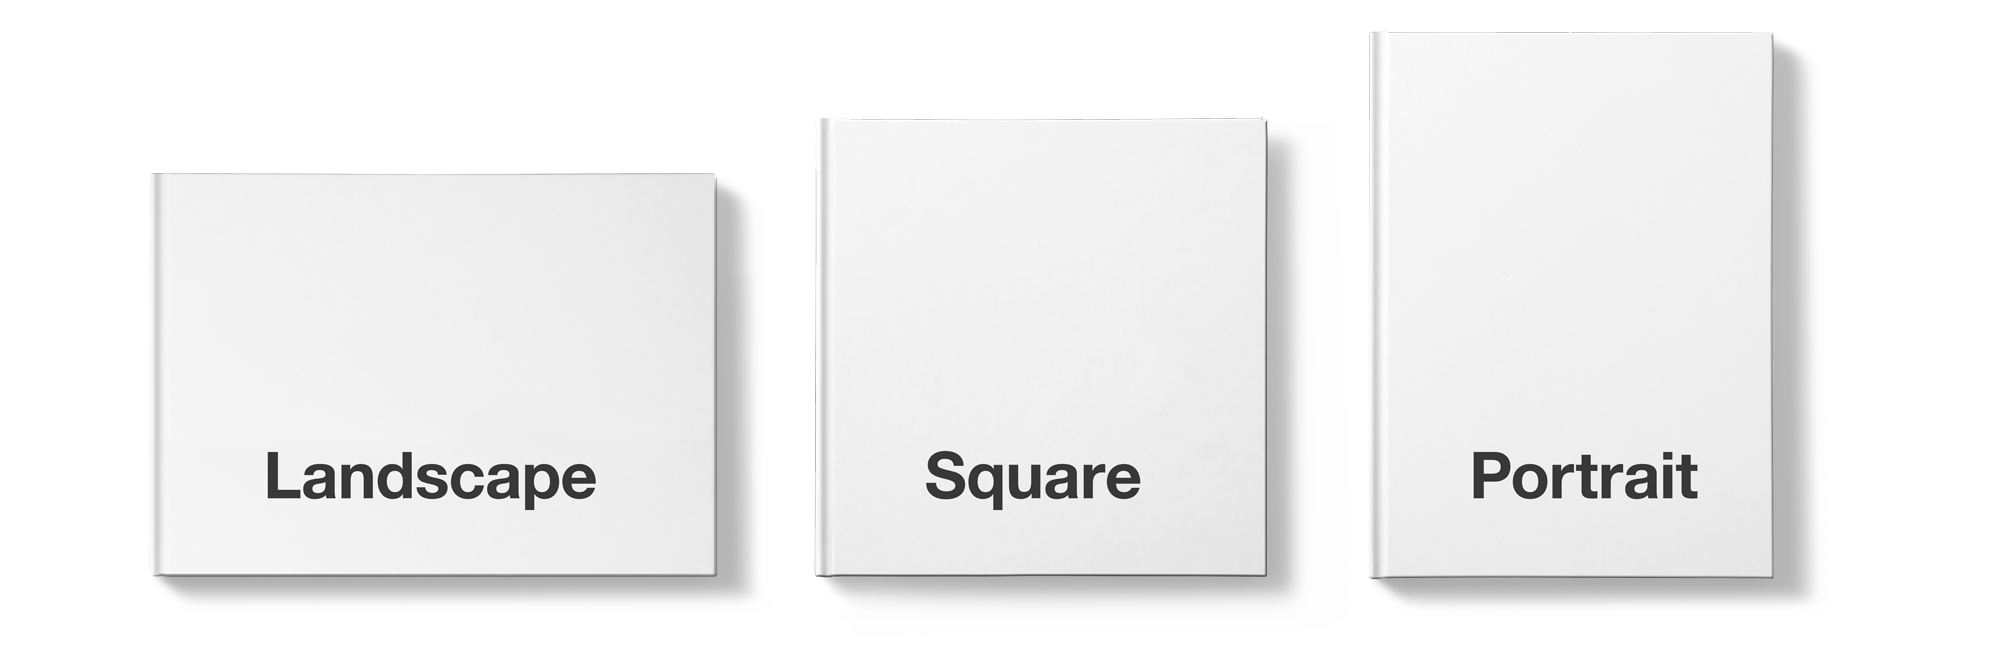 indesign square book template